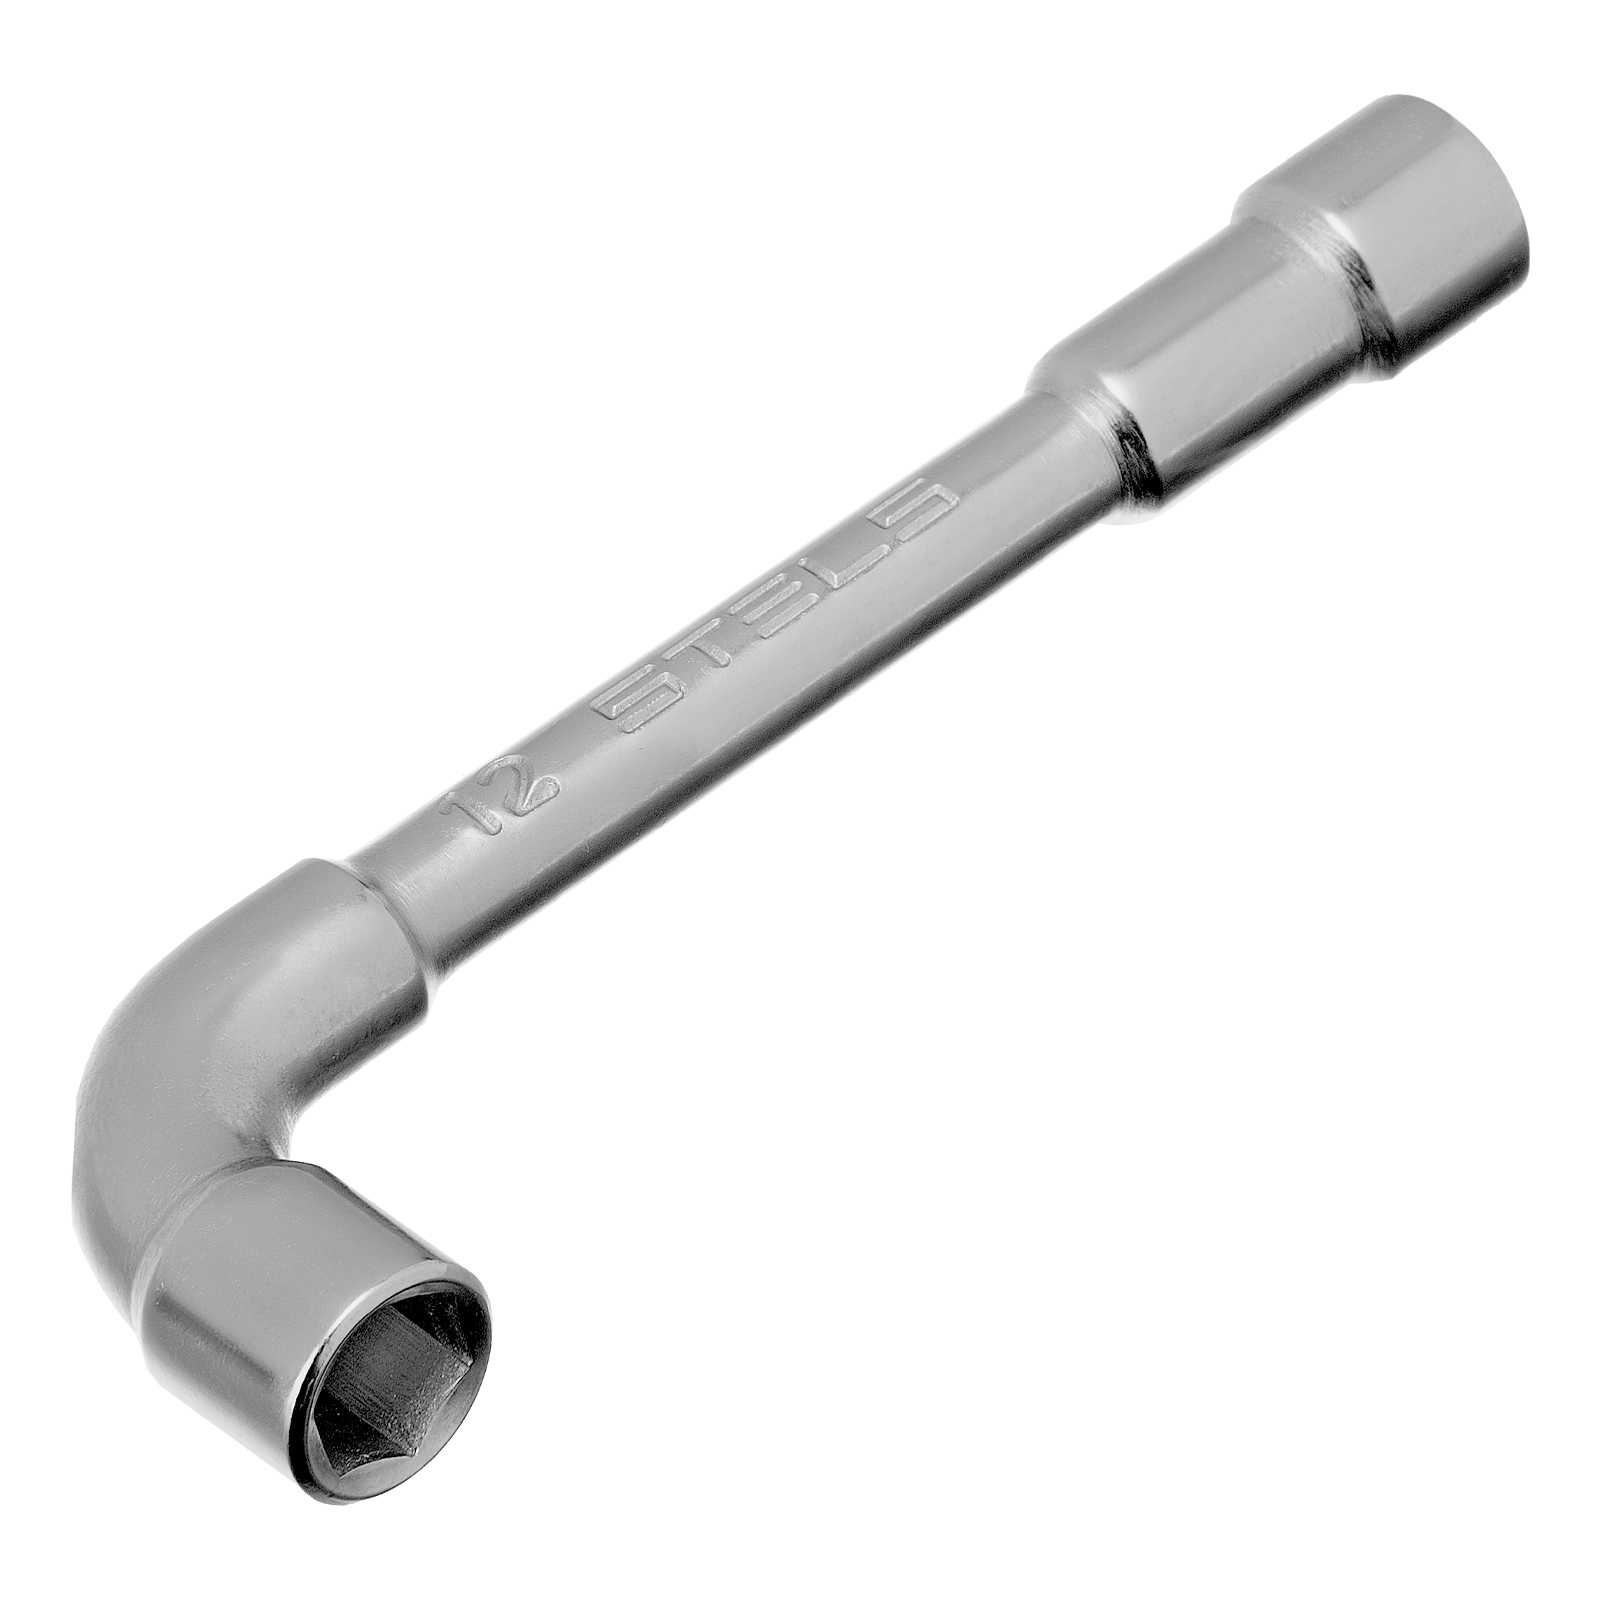 Торцевой трубчатый ключ STELS 14233 торцевой трубчатый ключ stels 14234